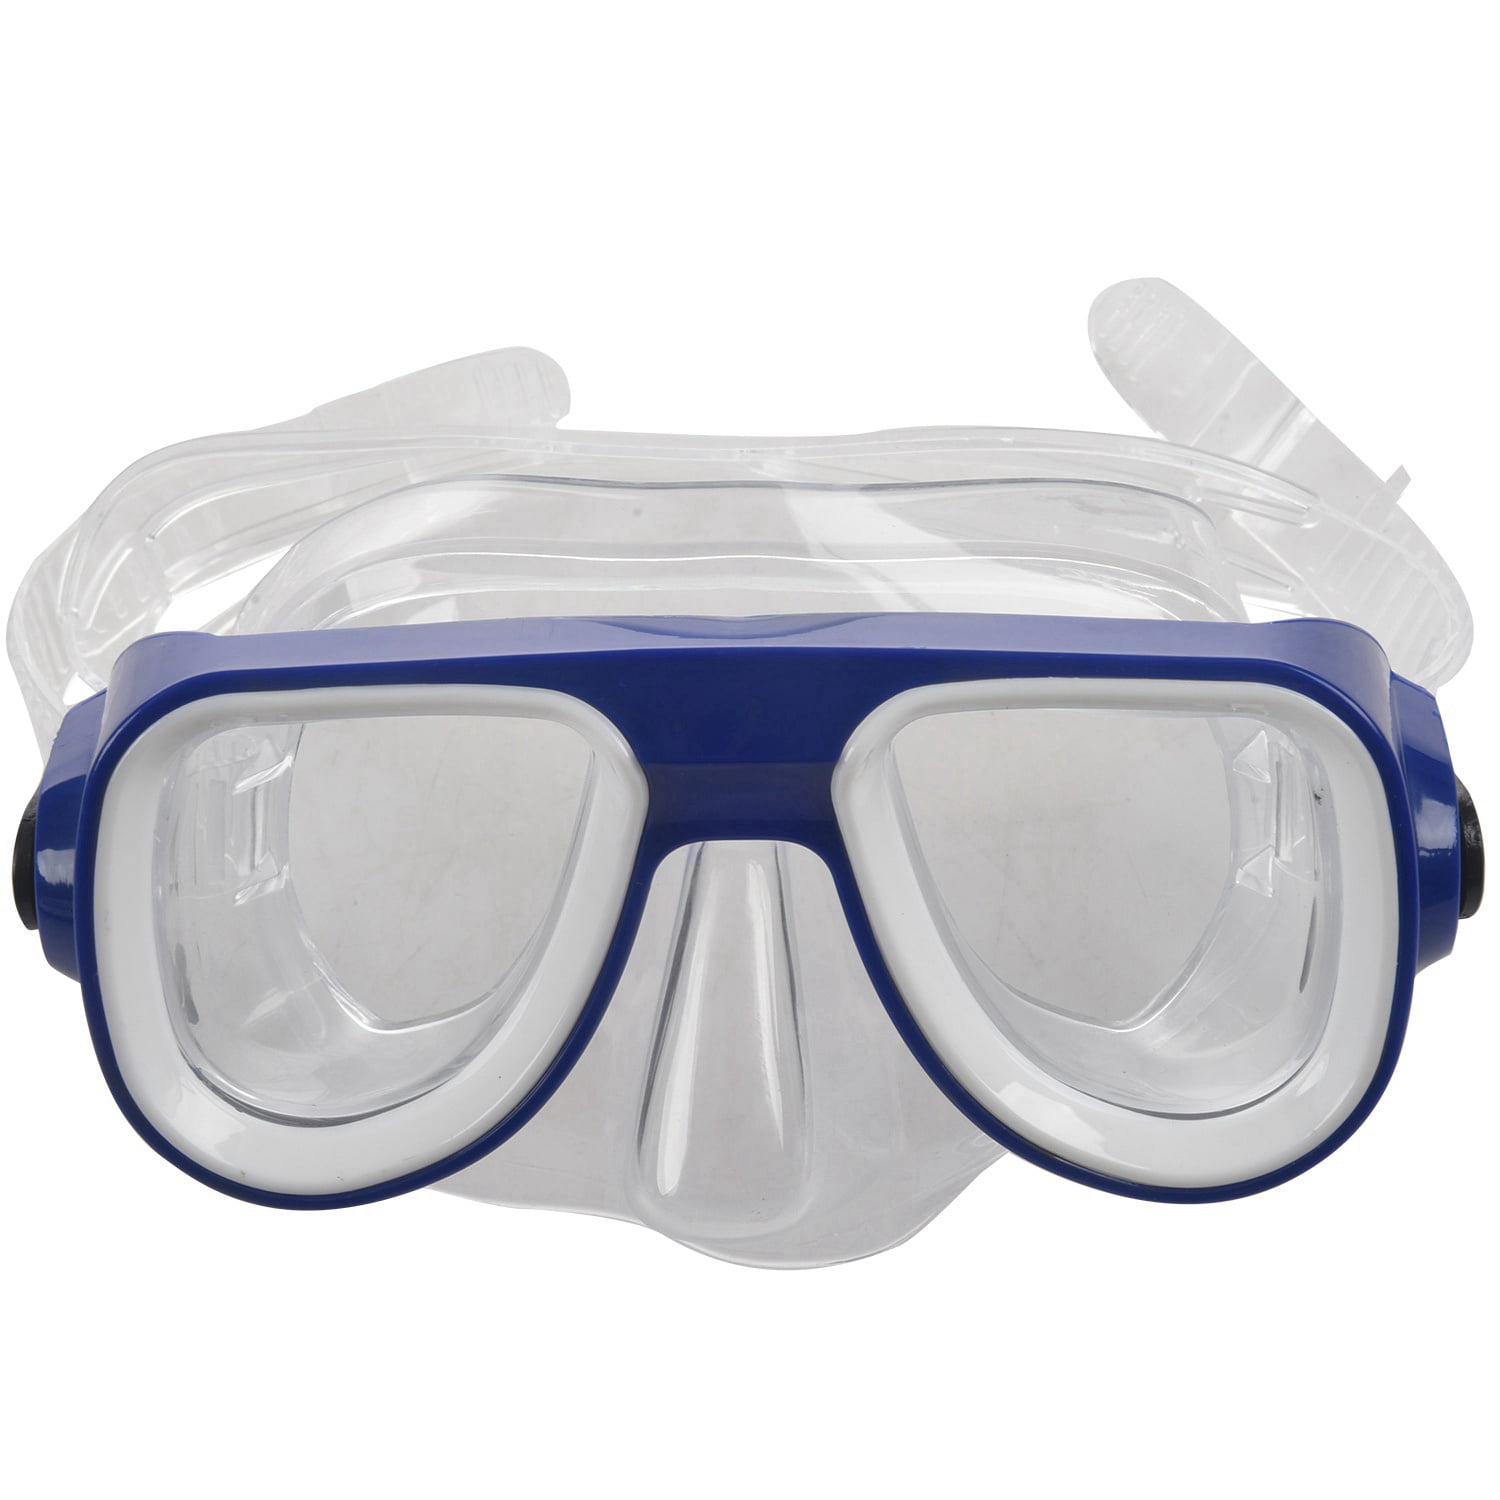 Sandis Children Safe Snorkeling Diving Snorkel Set Swimming Set Water Sports For Kid 3-8 Years Old Blue